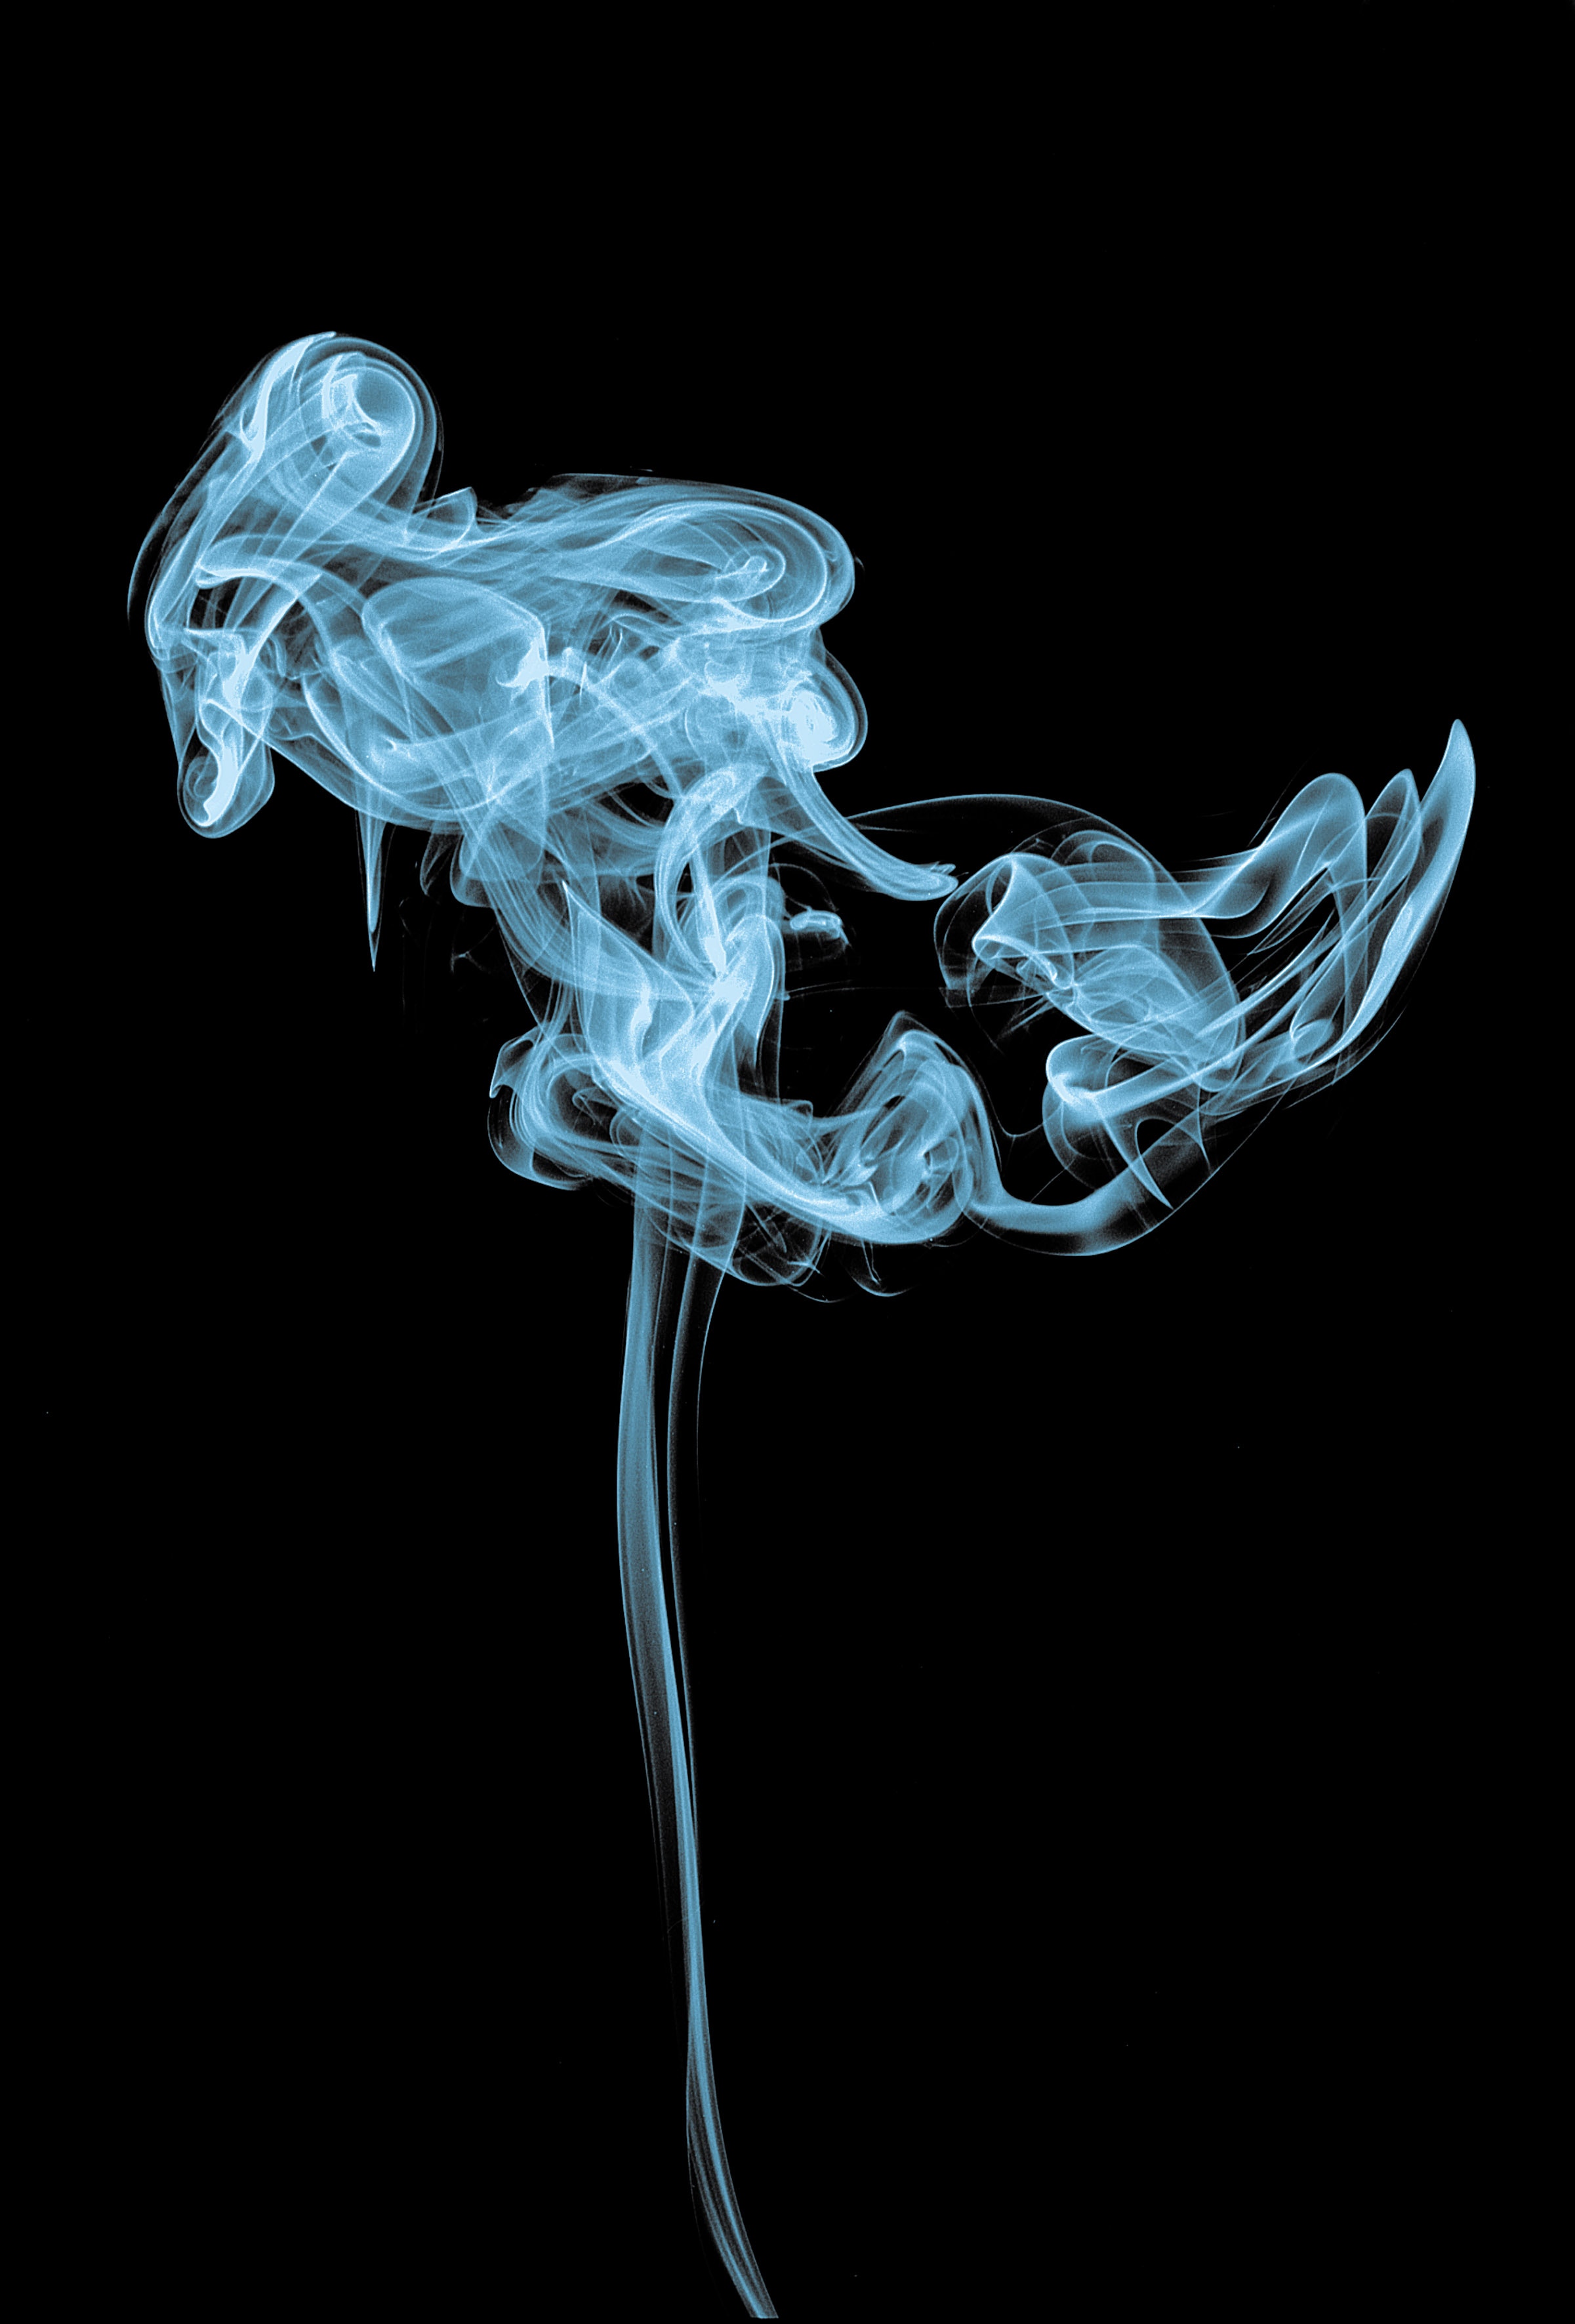 abstract, smoke, dark background, shroud, coils